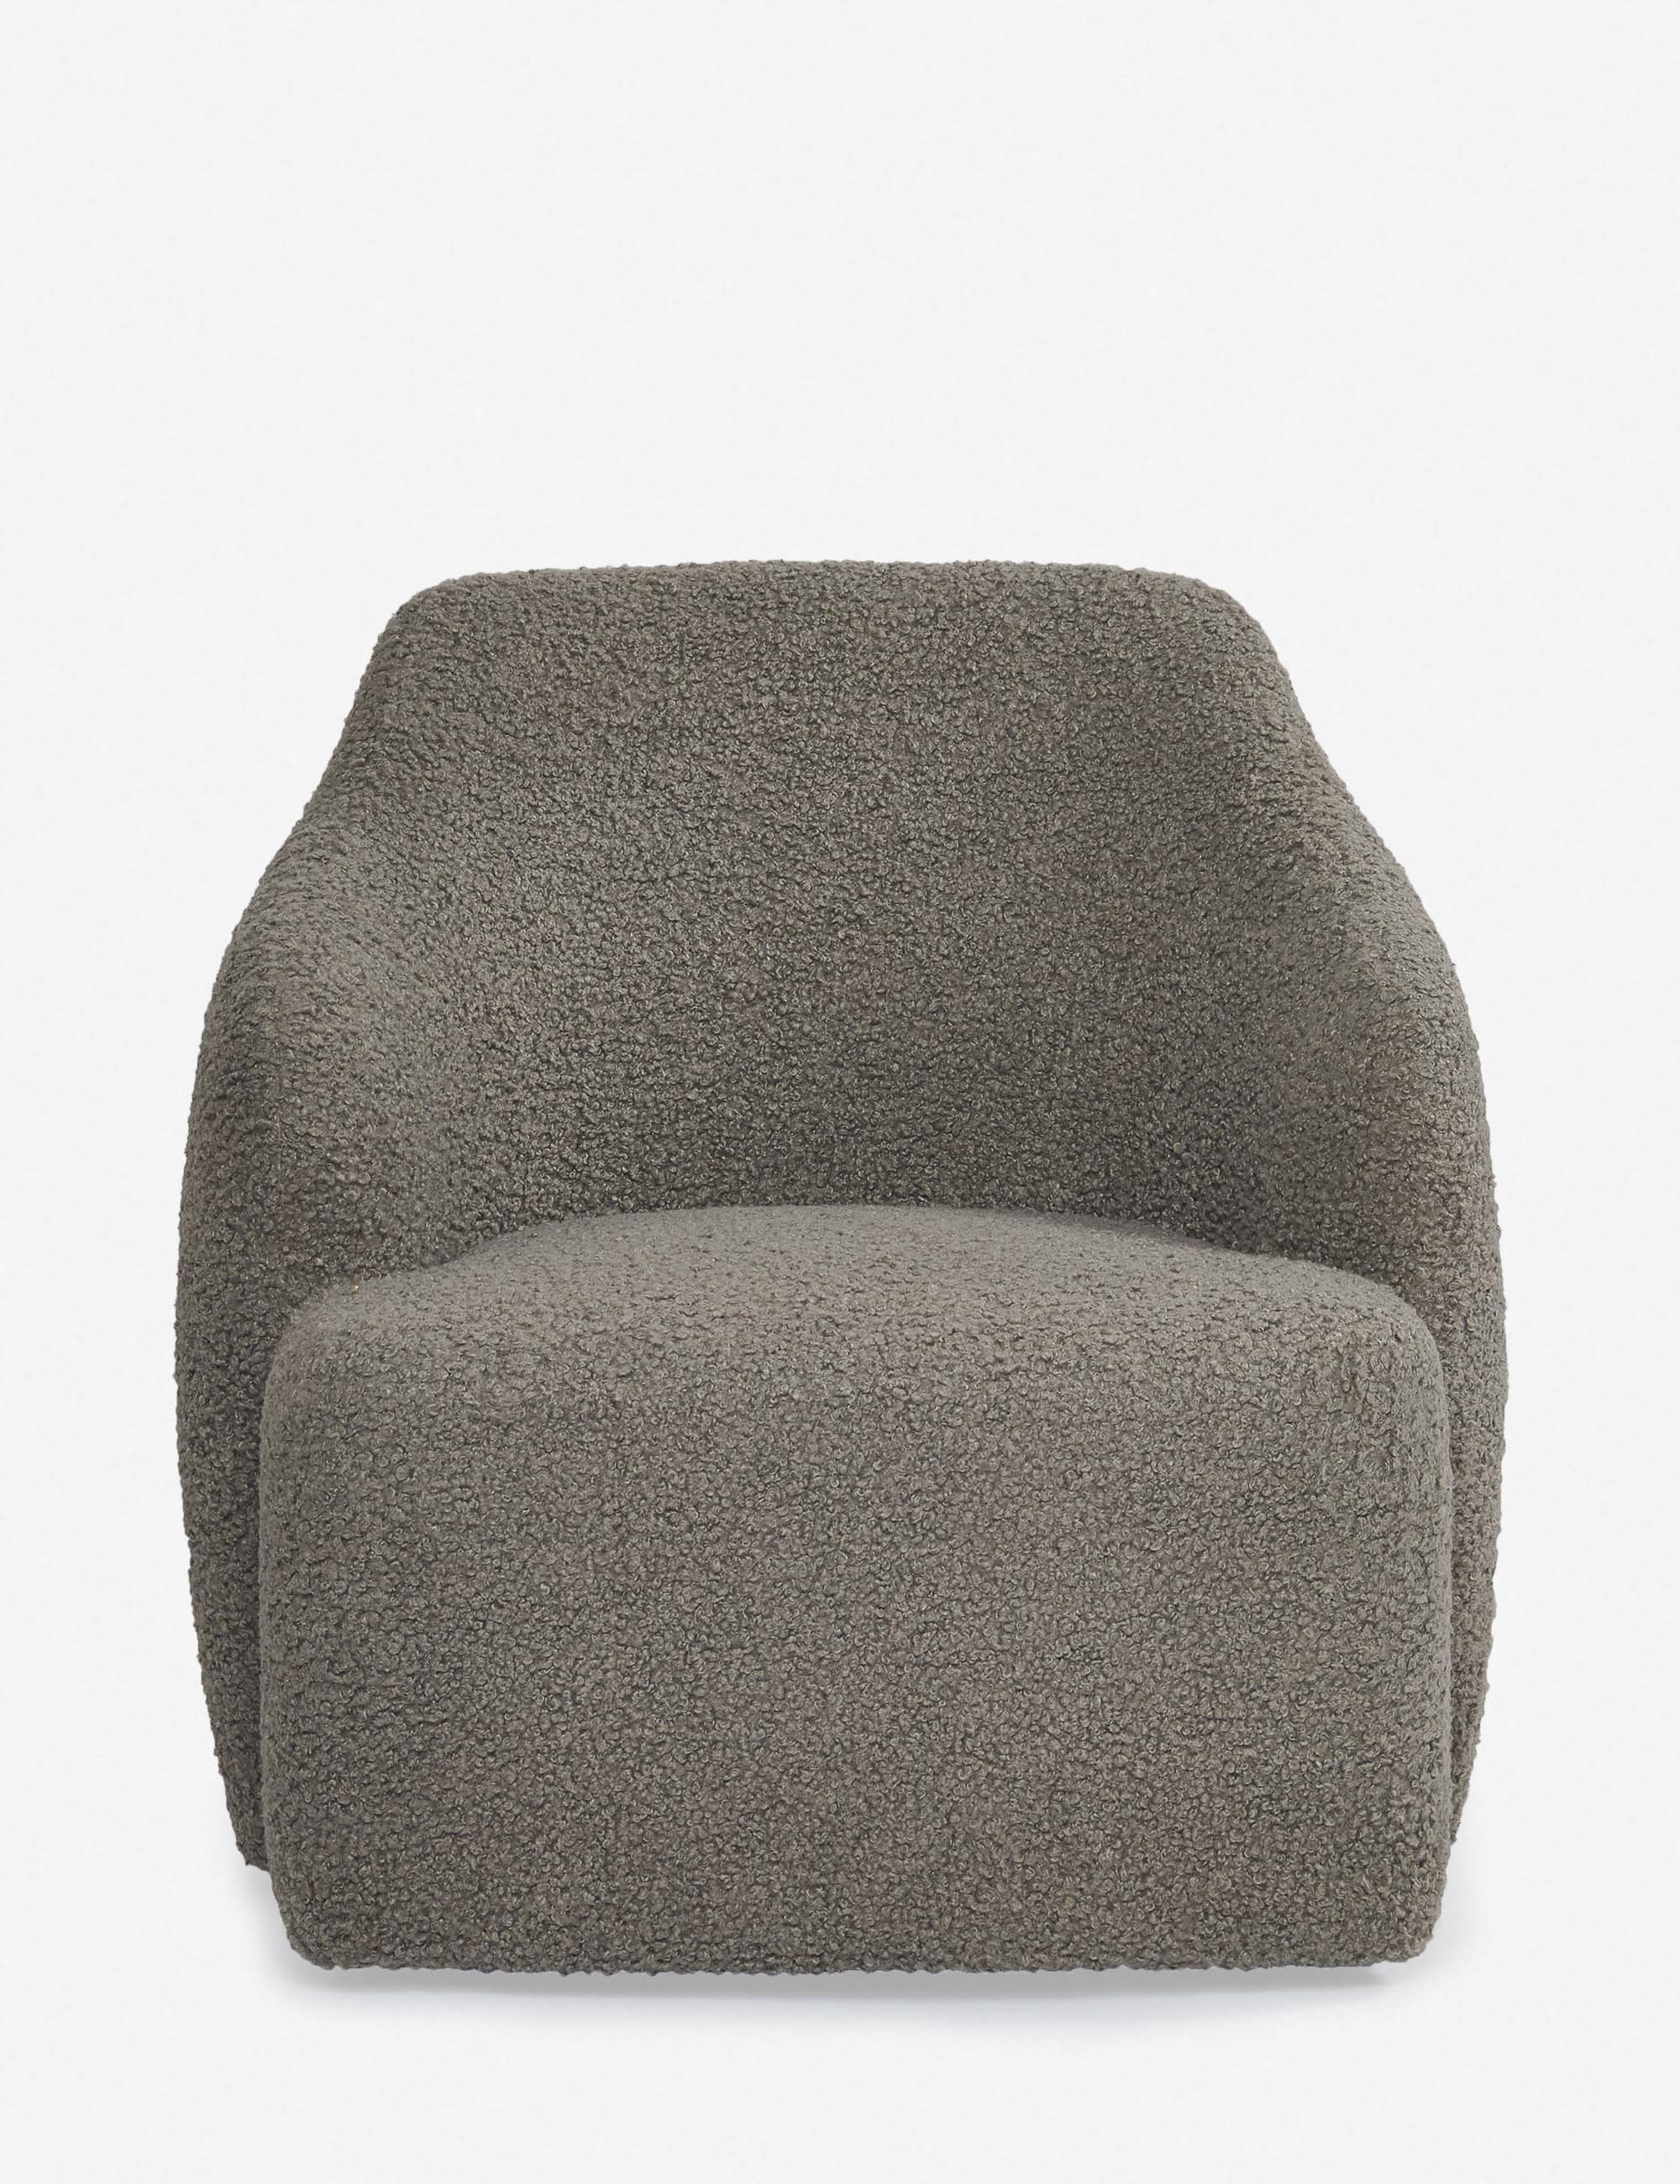 Tobi Swivel Chair - Image 0